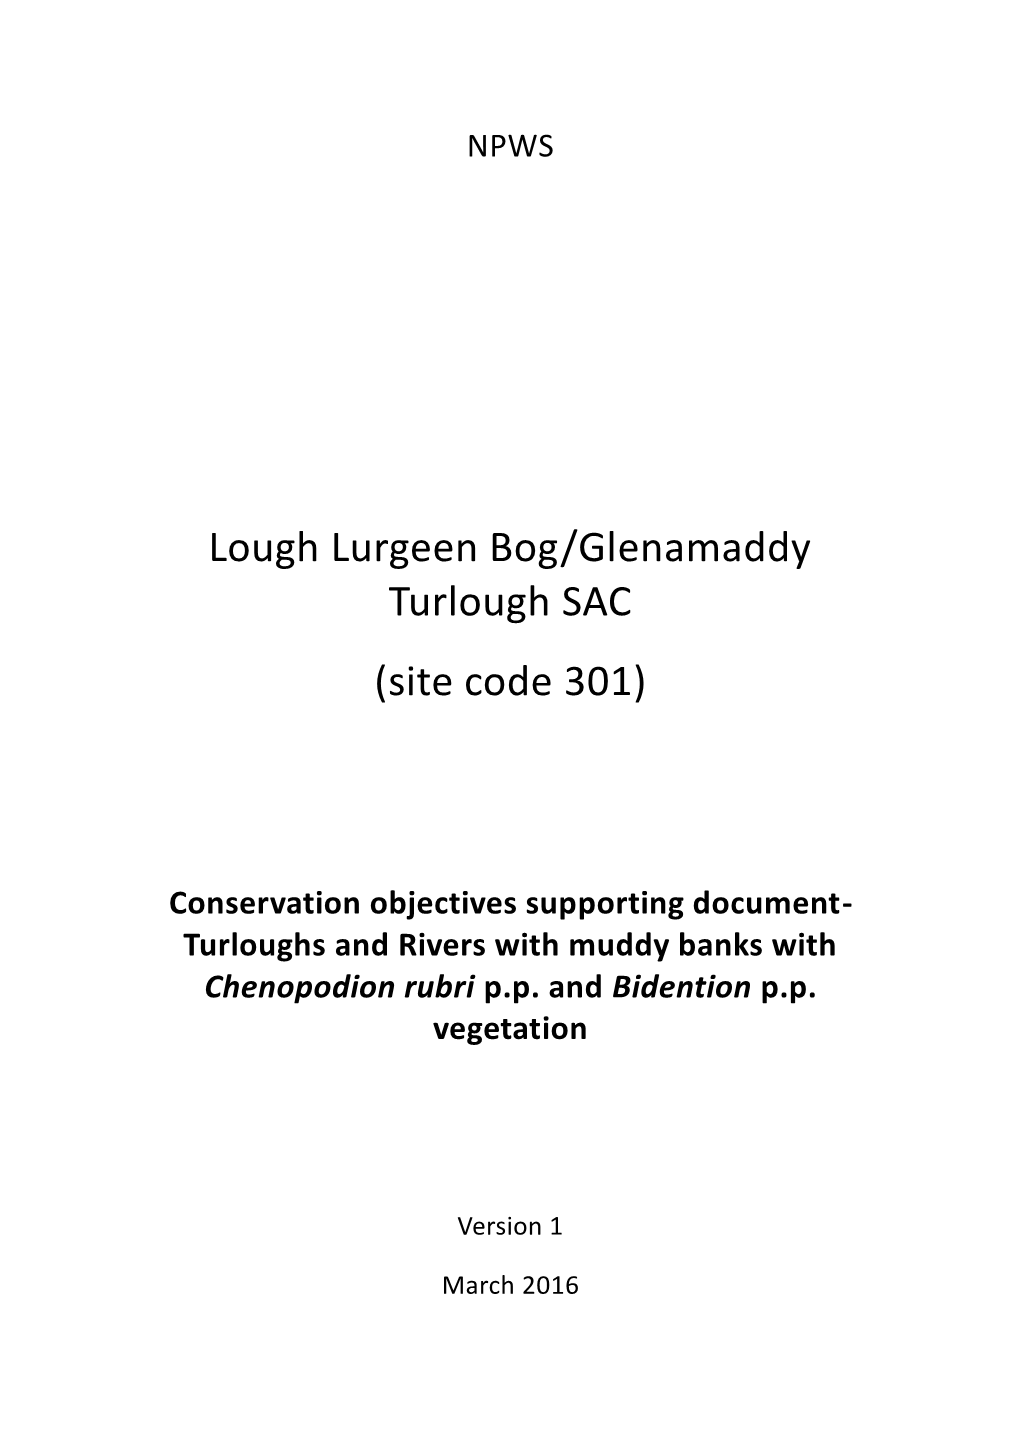 Lough Lurgeen Bog/Glenamaddy Turlough SAC (Site Code 301)